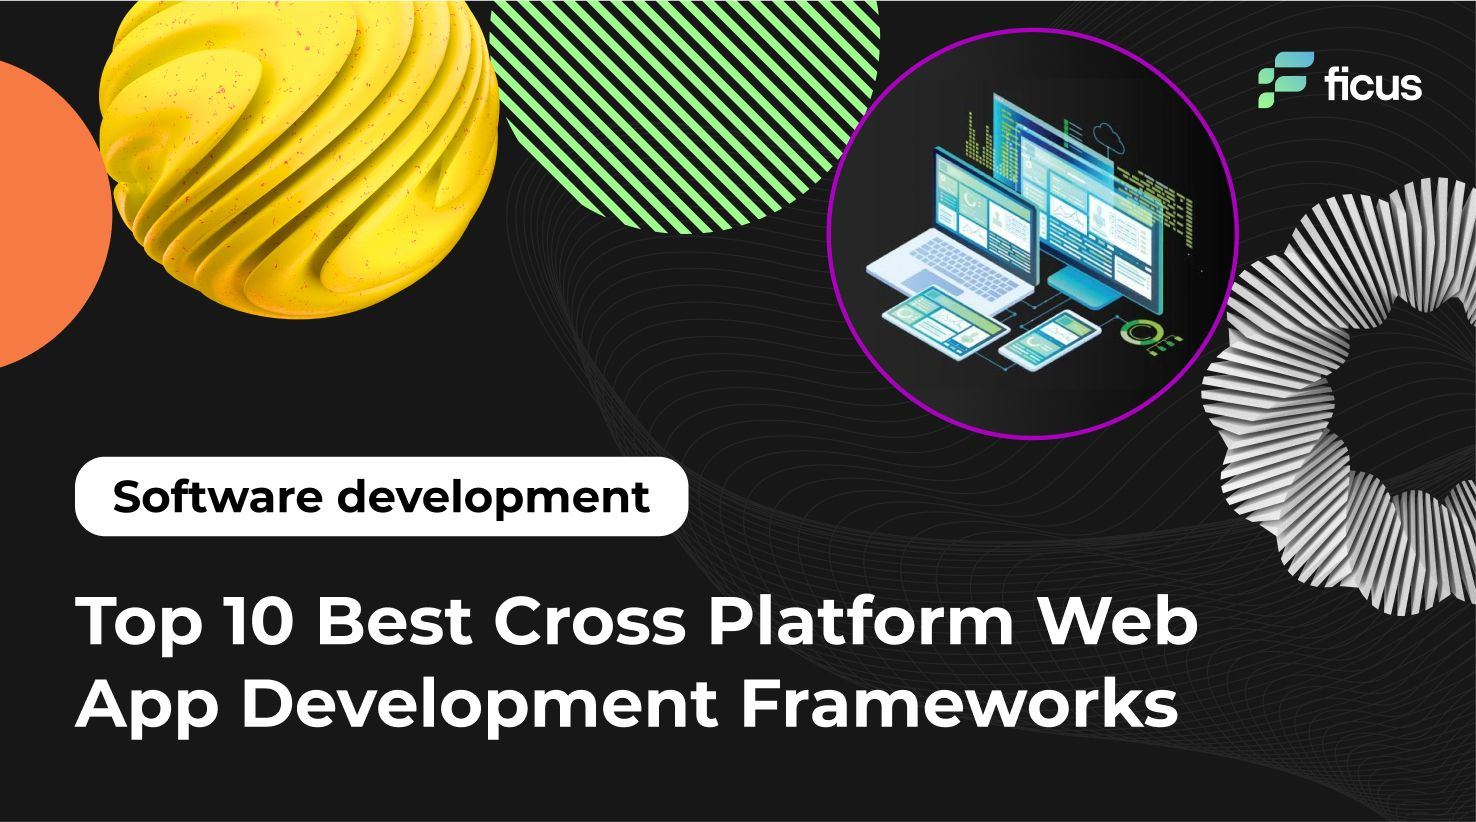 Top 10 Best Cross-Platform Web App Development Frameworks